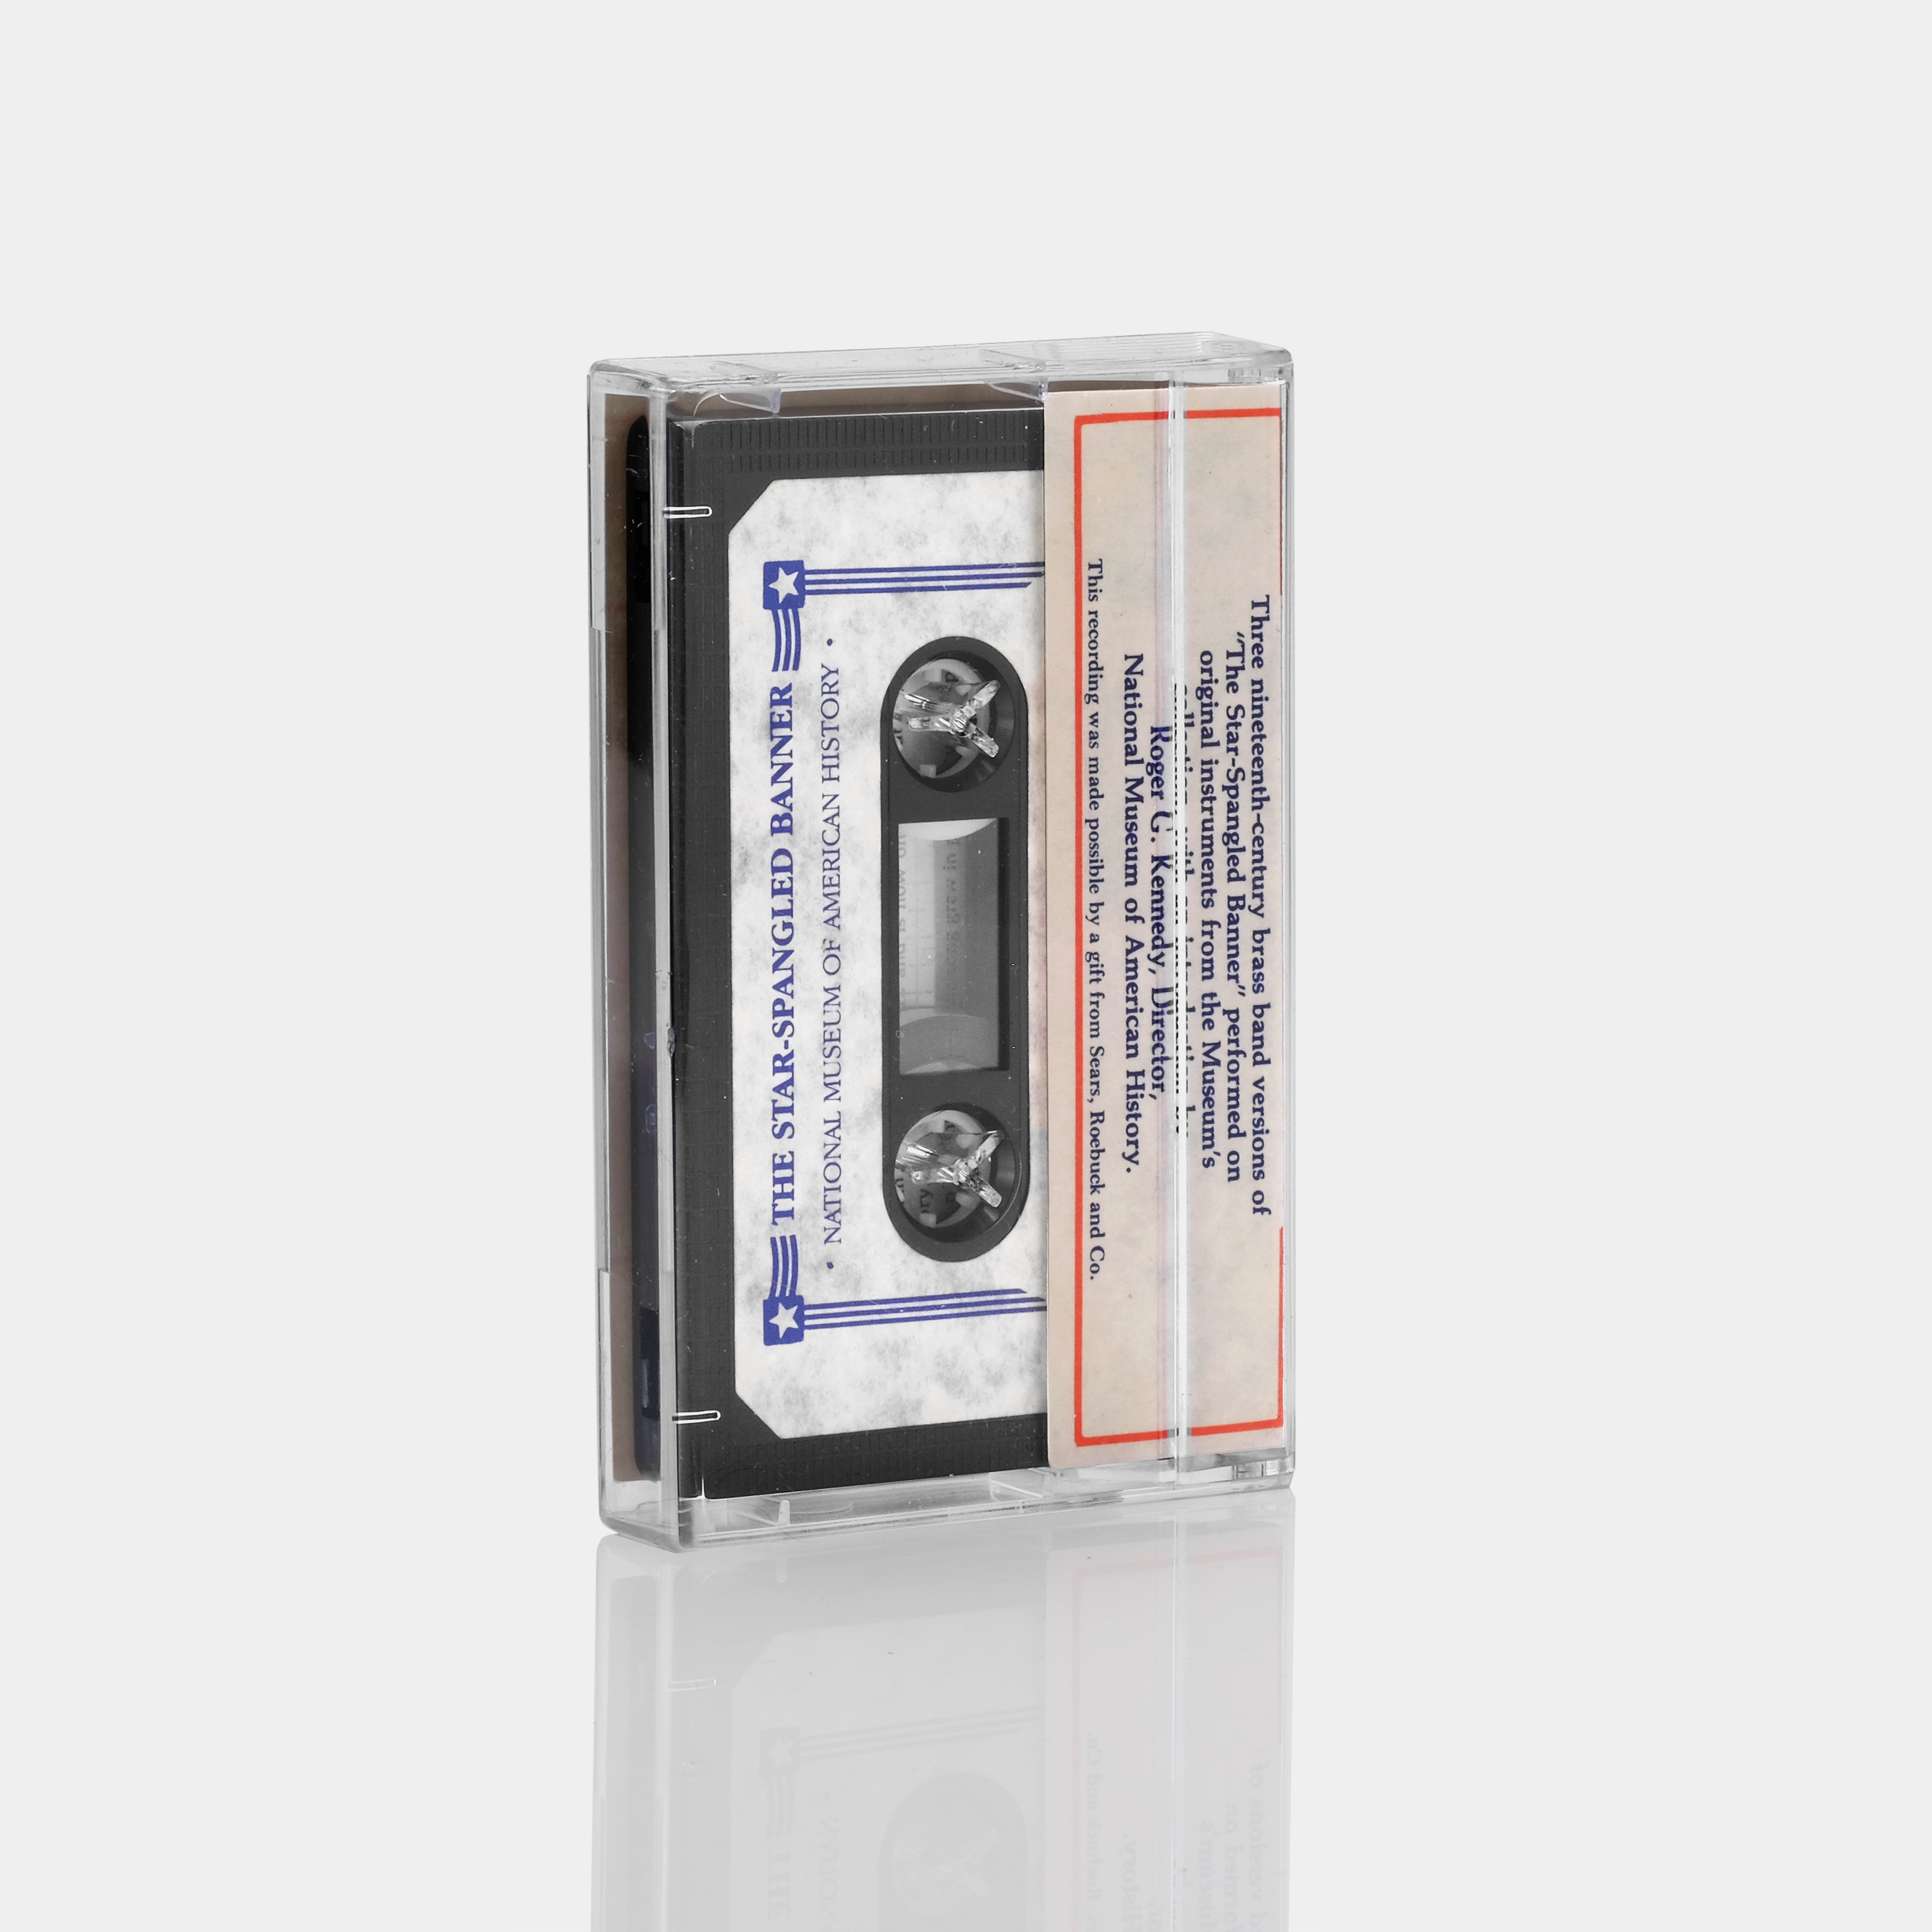 Smithsonian Institution - The Star-Spangled Banner Cassette Tape